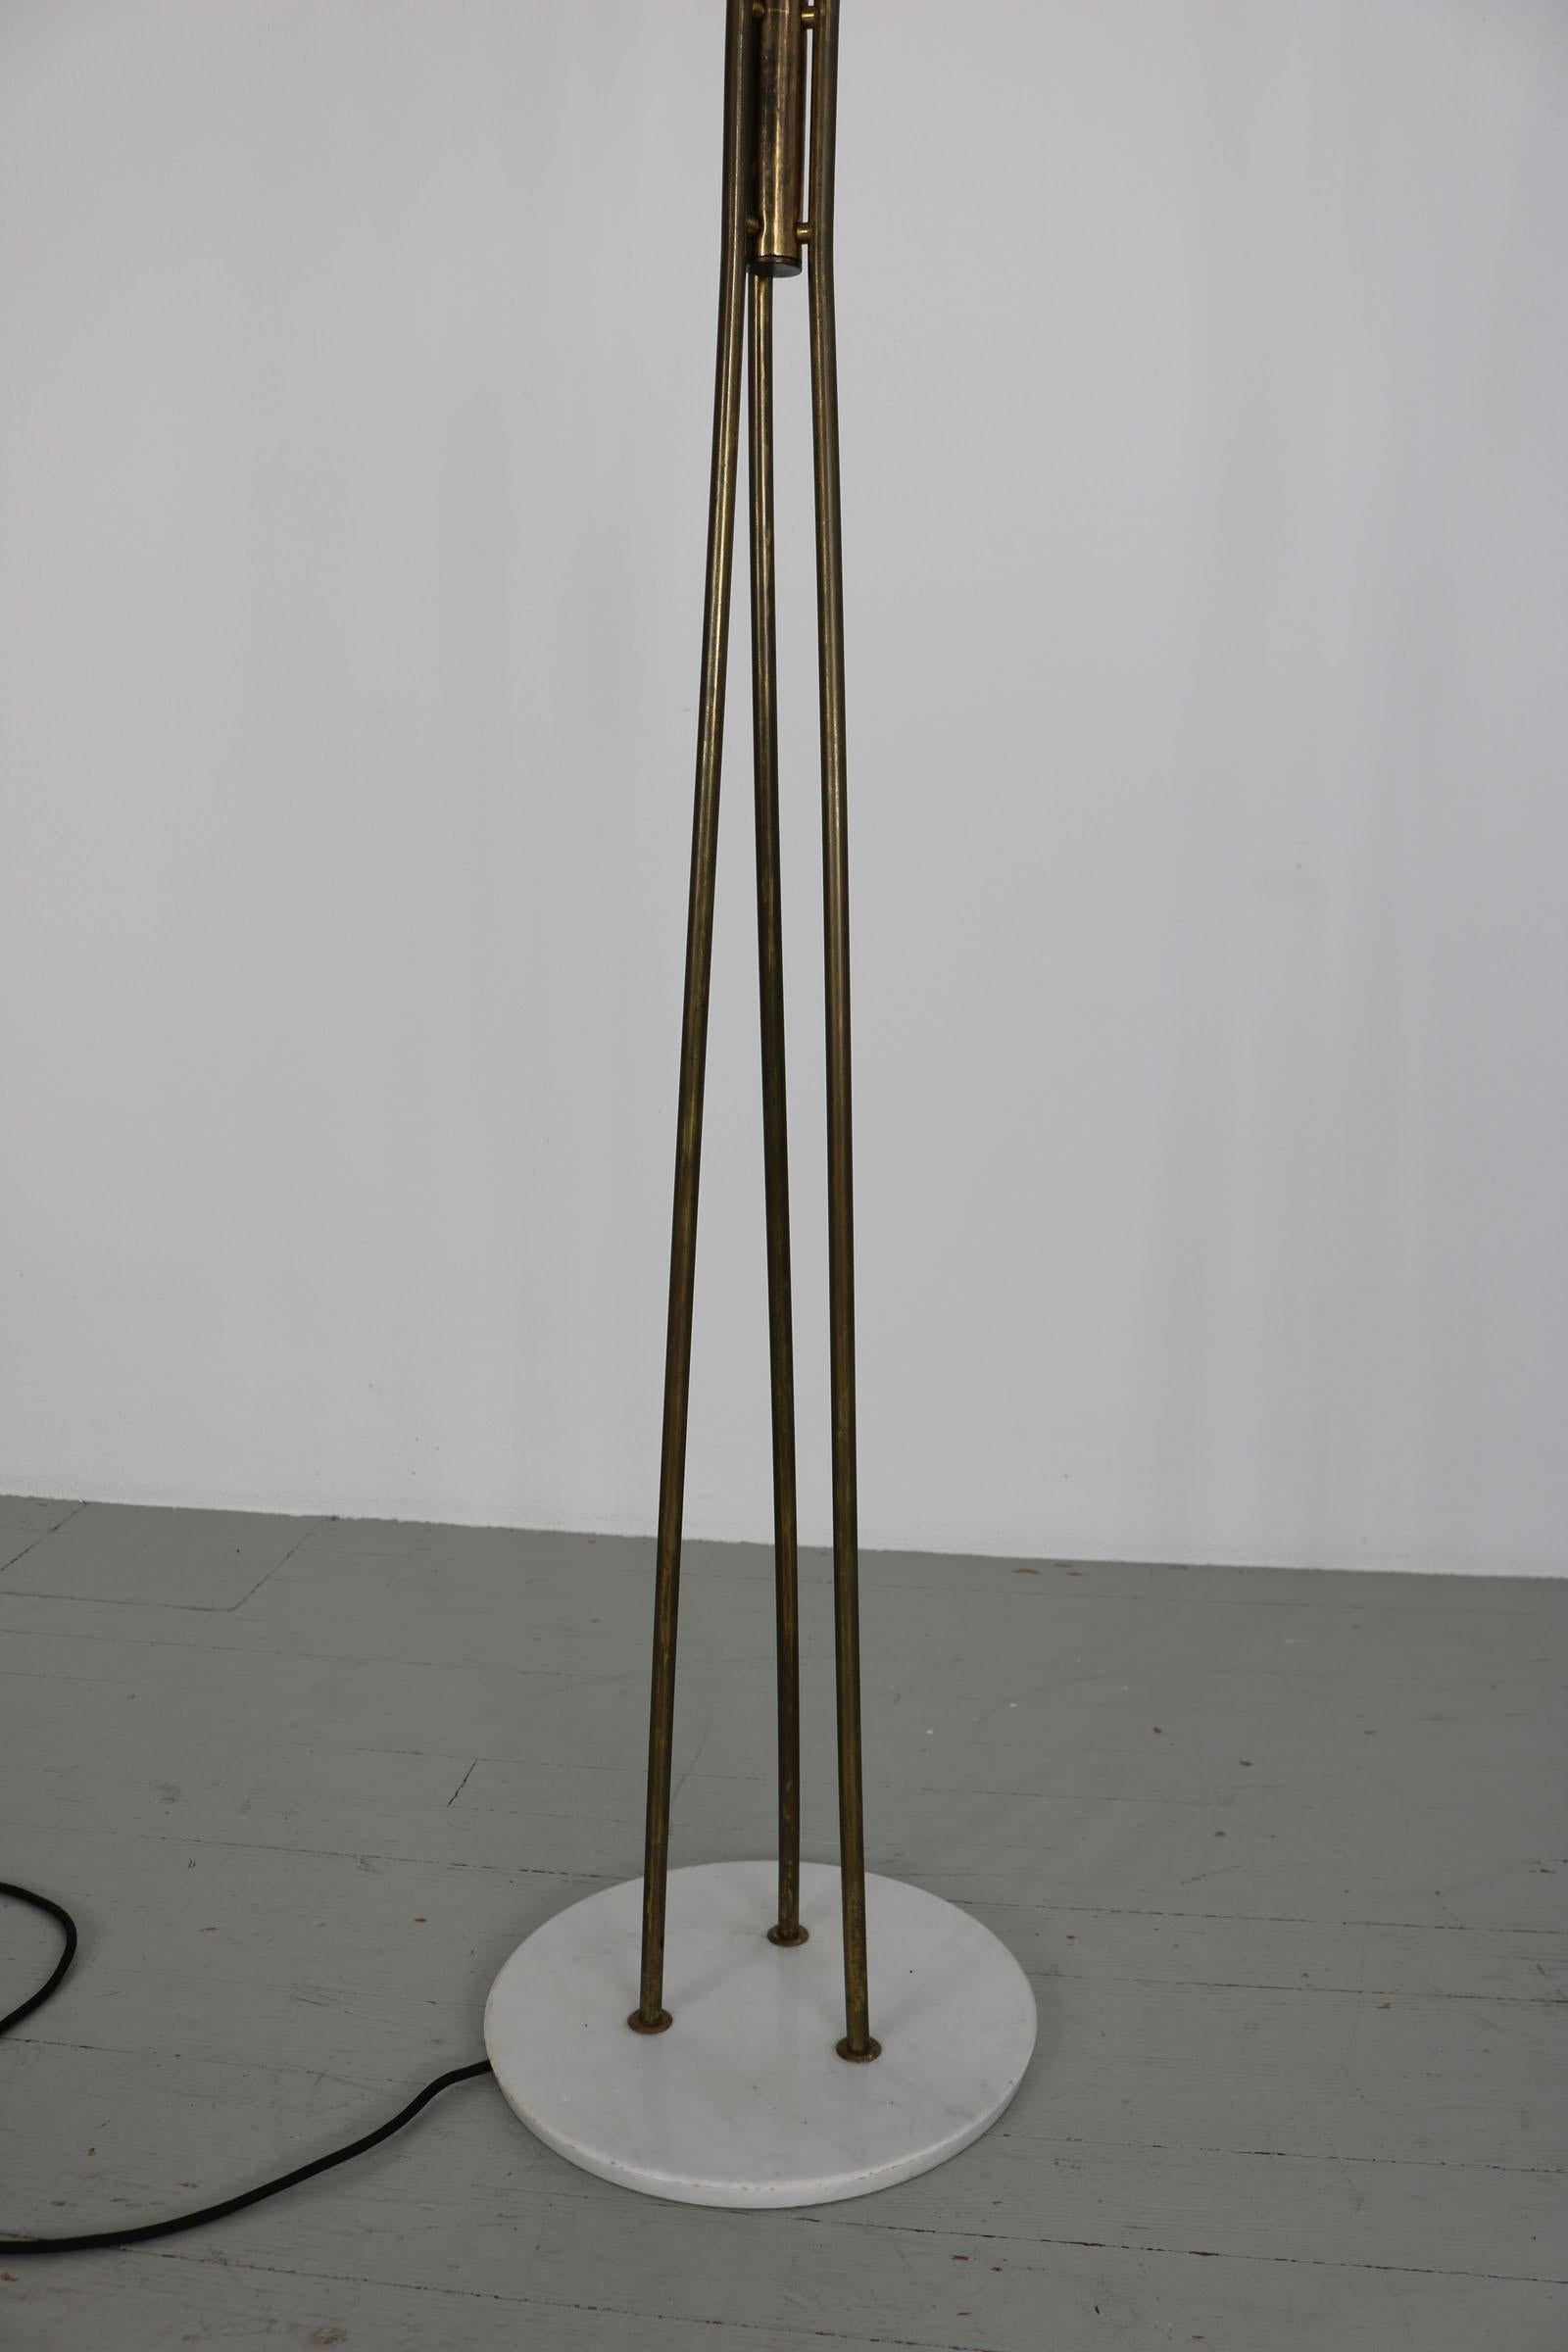 Gateano Scolari Stilnovo Italian Floor Lamp from the 50s For Sale 2